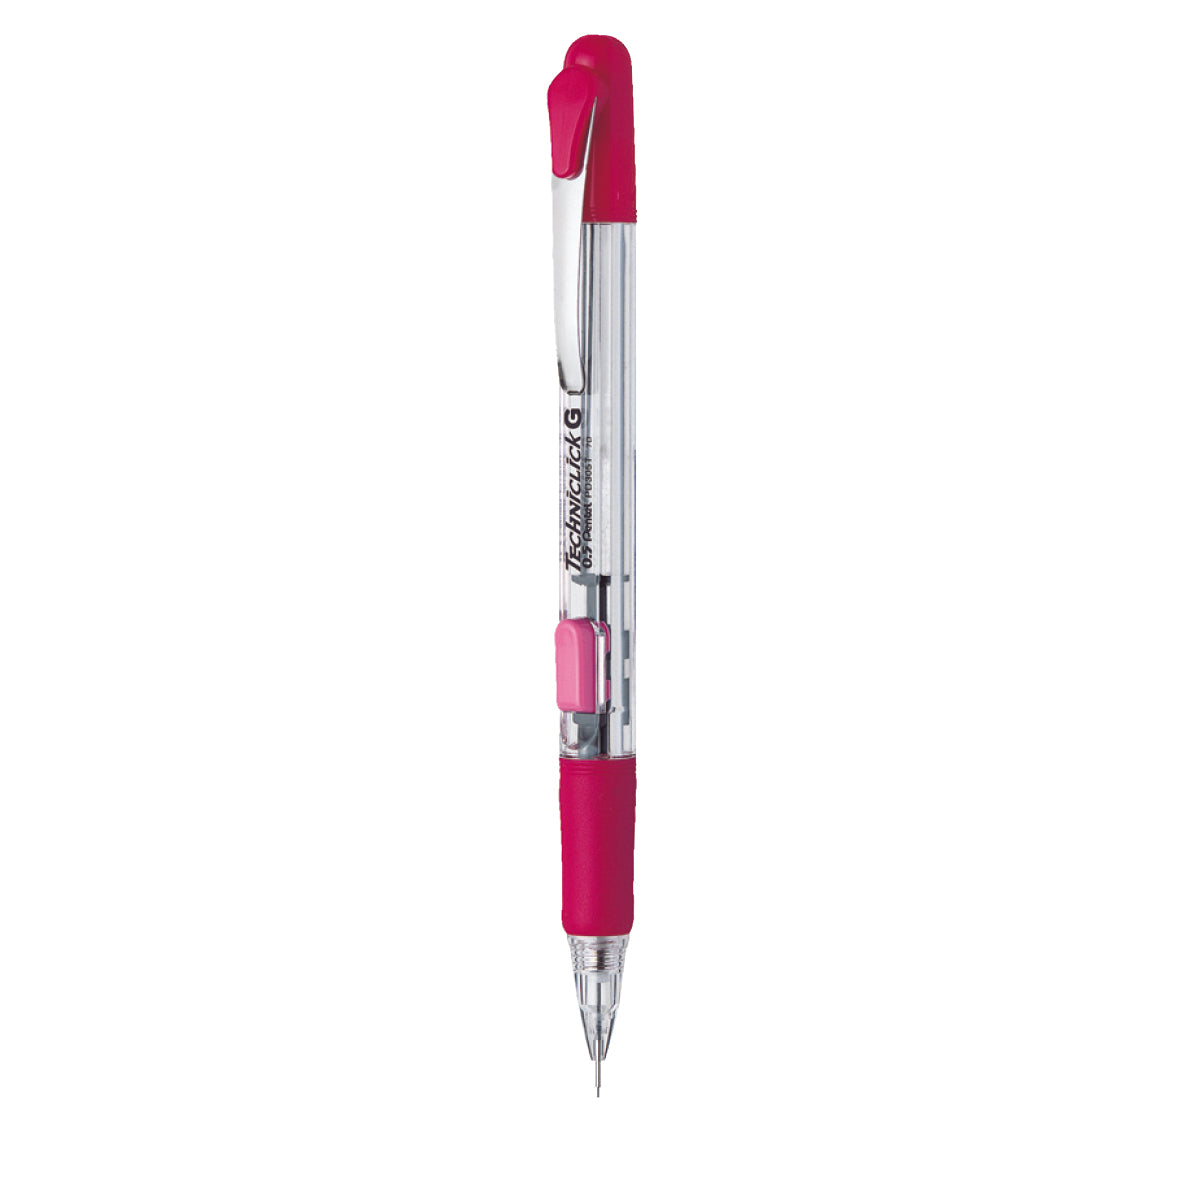 Shop Pentel Mechanical Draft Pencil TECHNICLICK G 0.5mm online in Abu Dhabi, UAE